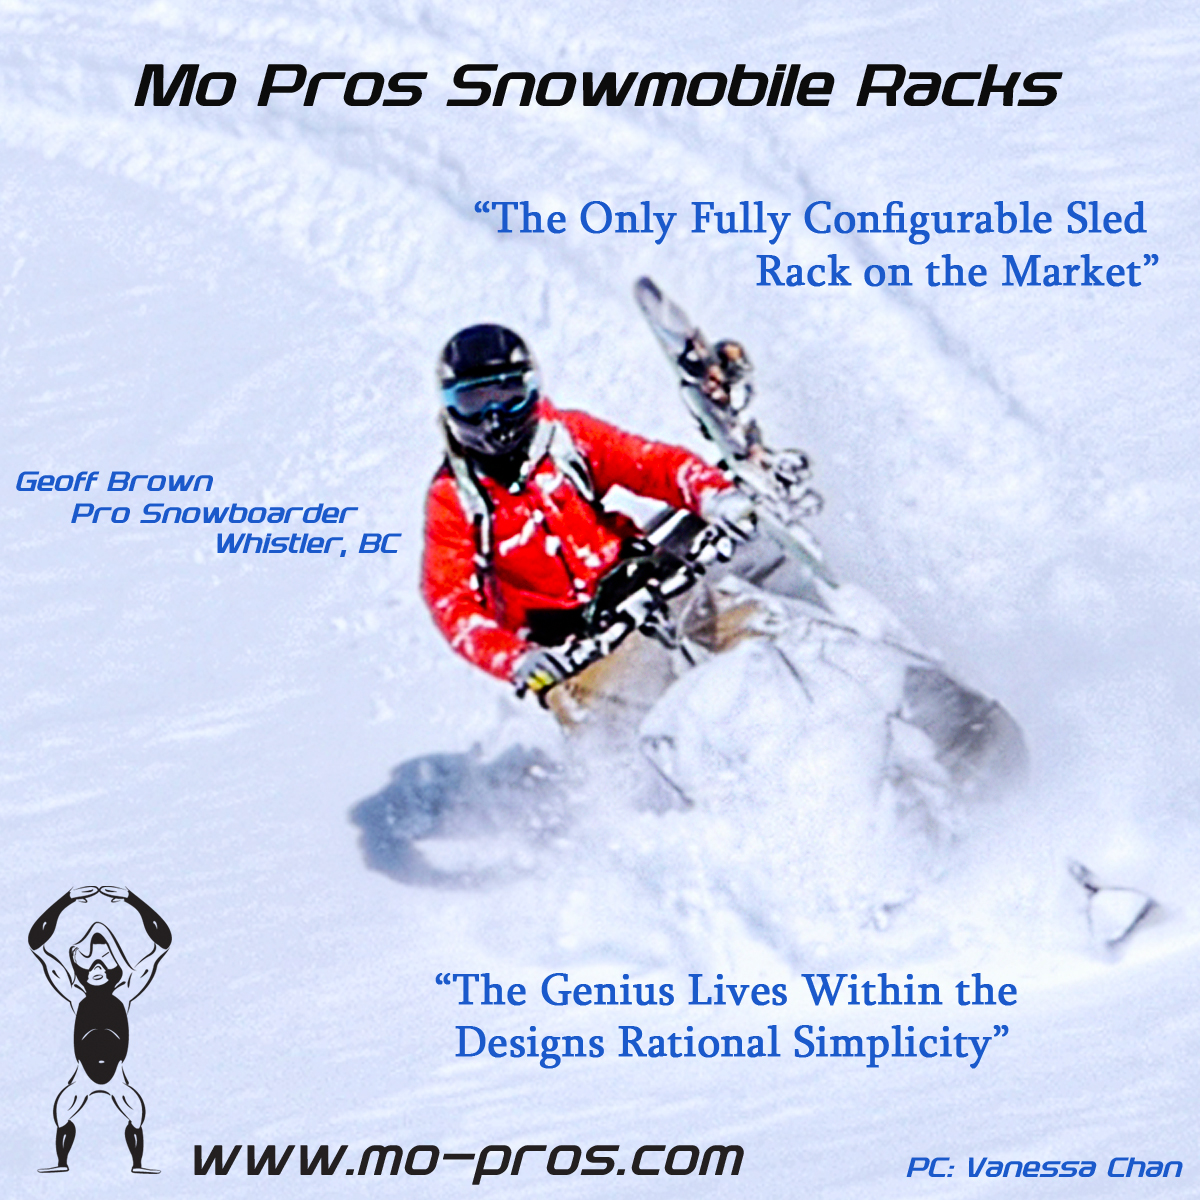 arroya mono-ski - Beneficial Designs Inc